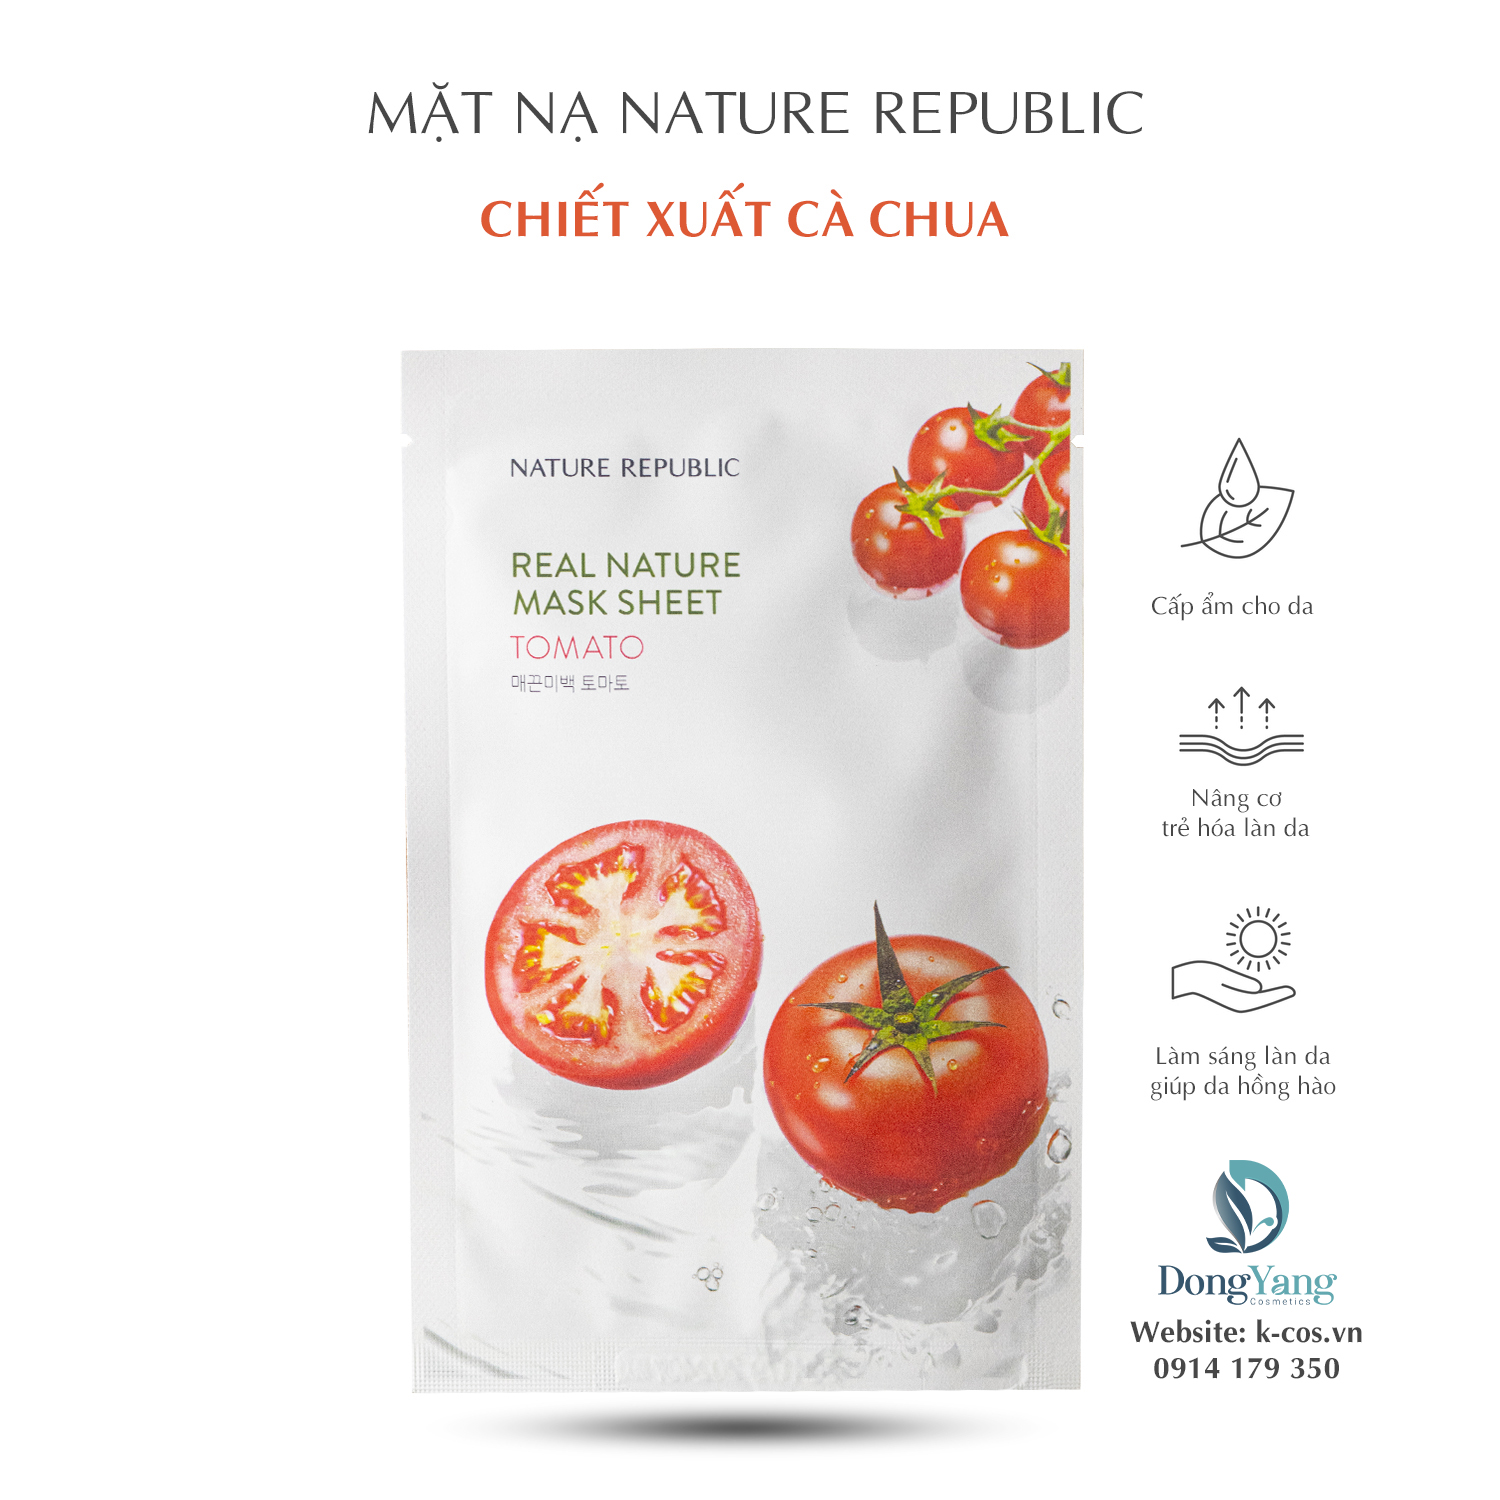 Mặt Nạ Nature Republic Chiết Xuất Cà Chua Cấp Ẩm Da 23ml Real Nature Tomato Mask Sheet